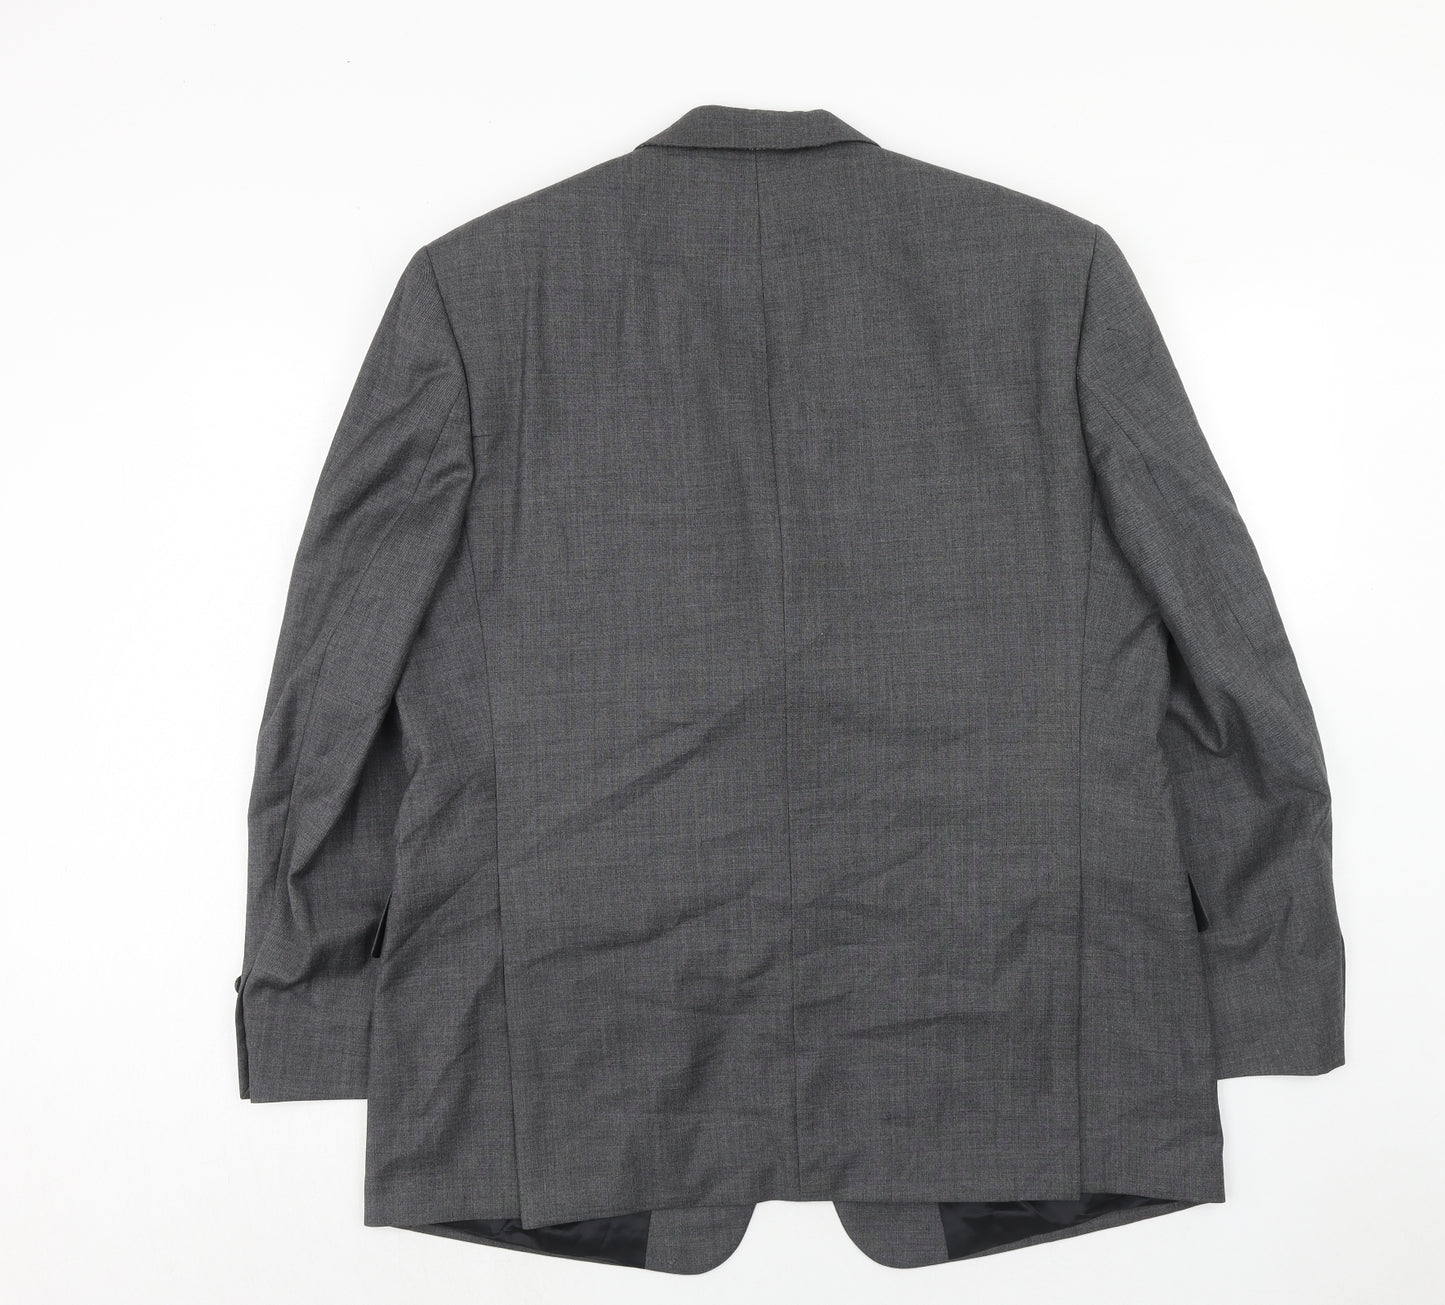 Digel Mens Grey Wool Jacket Suit Jacket Size 42 Regular